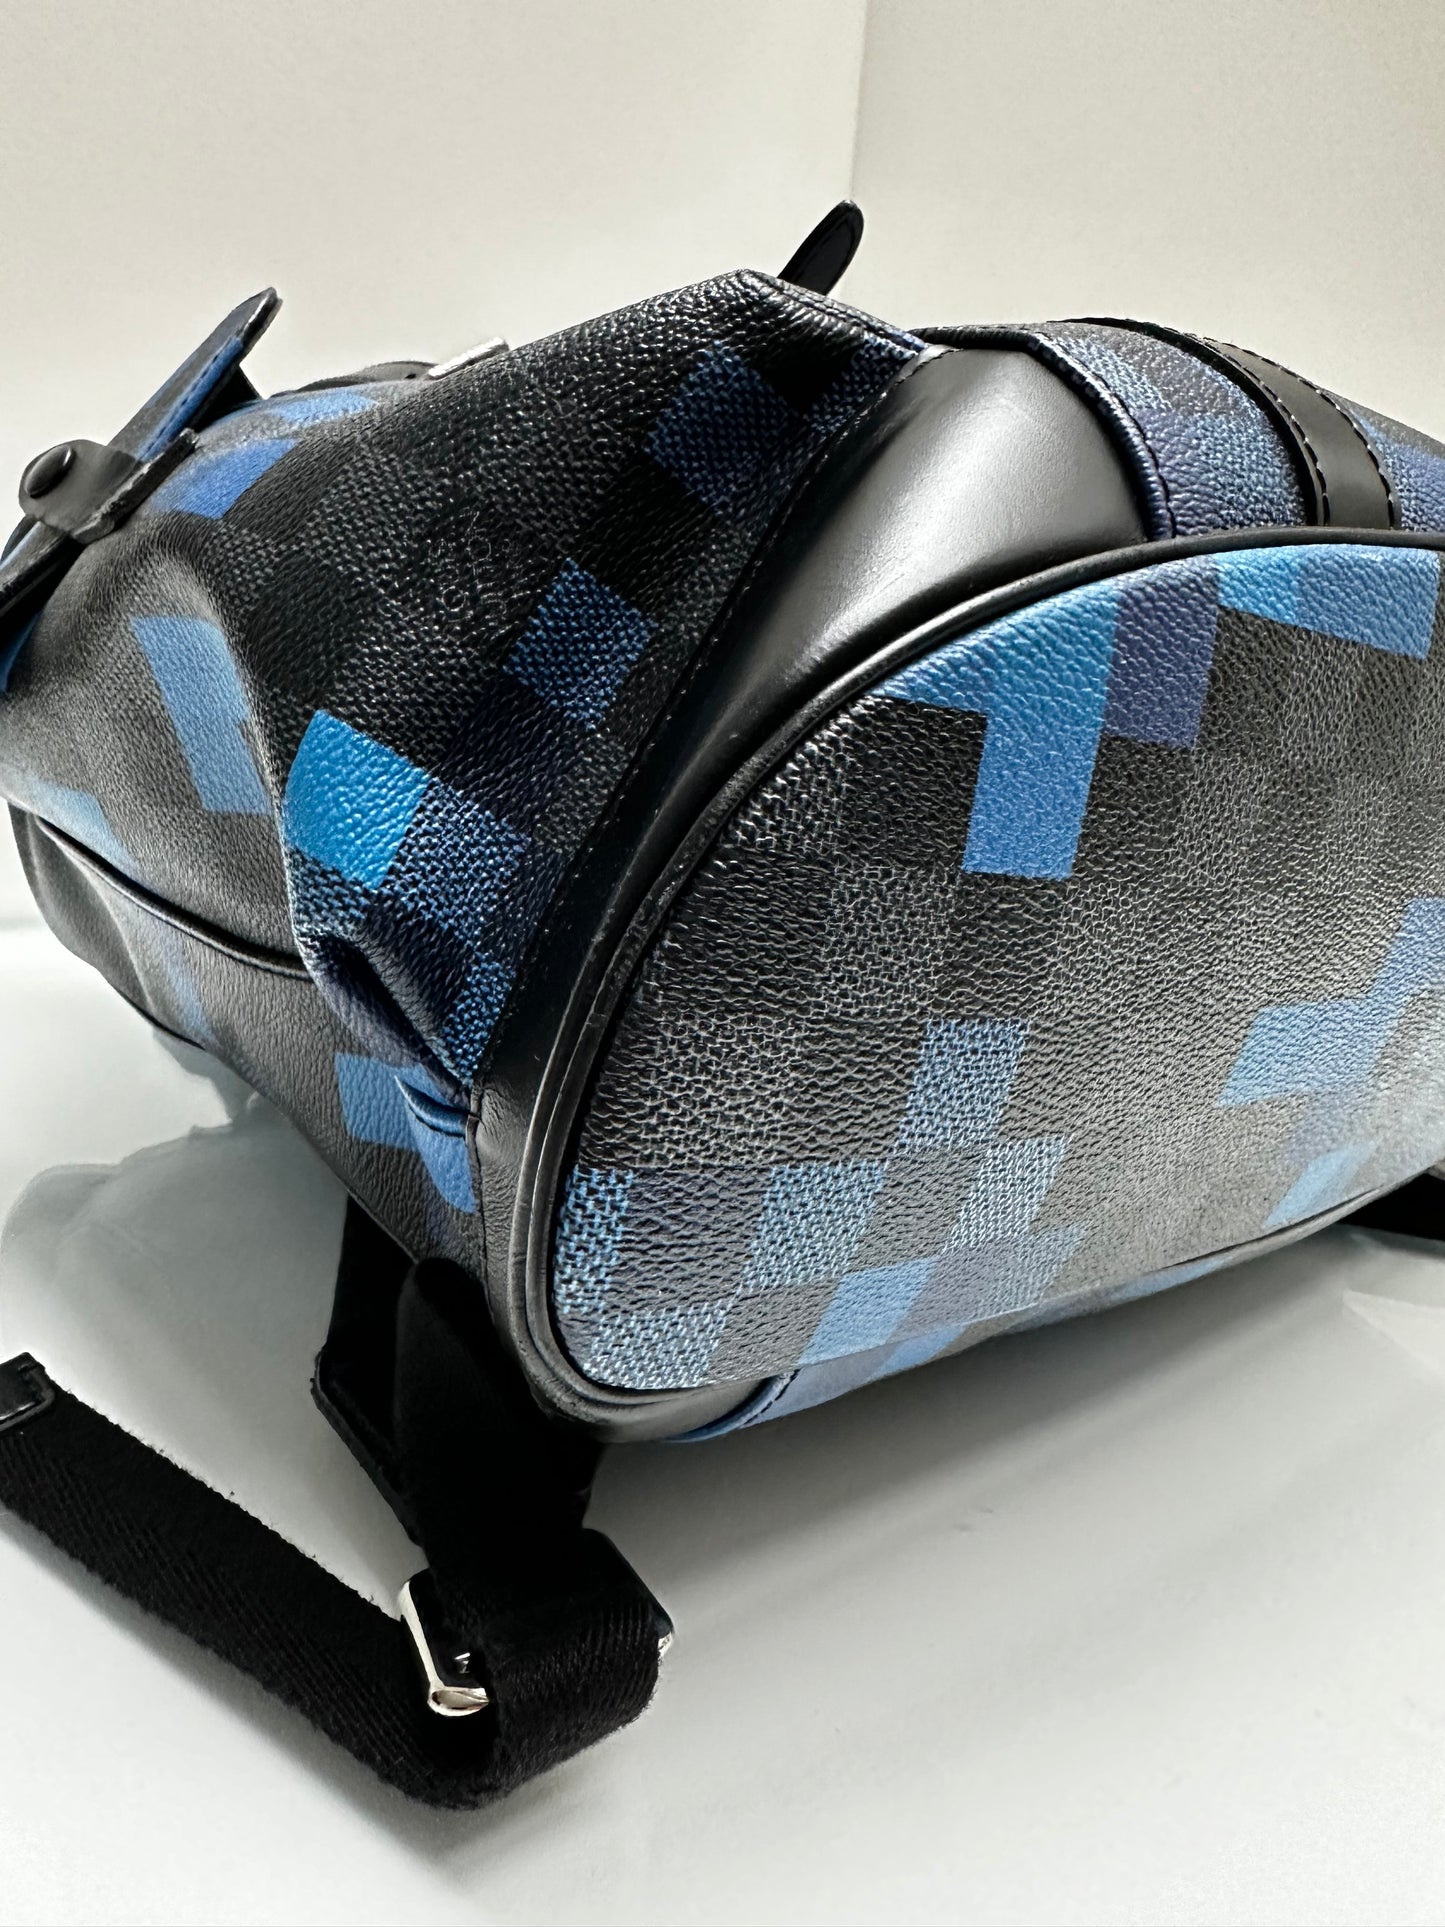 Louis Vuitton Damier Graphite & Blue Backpack